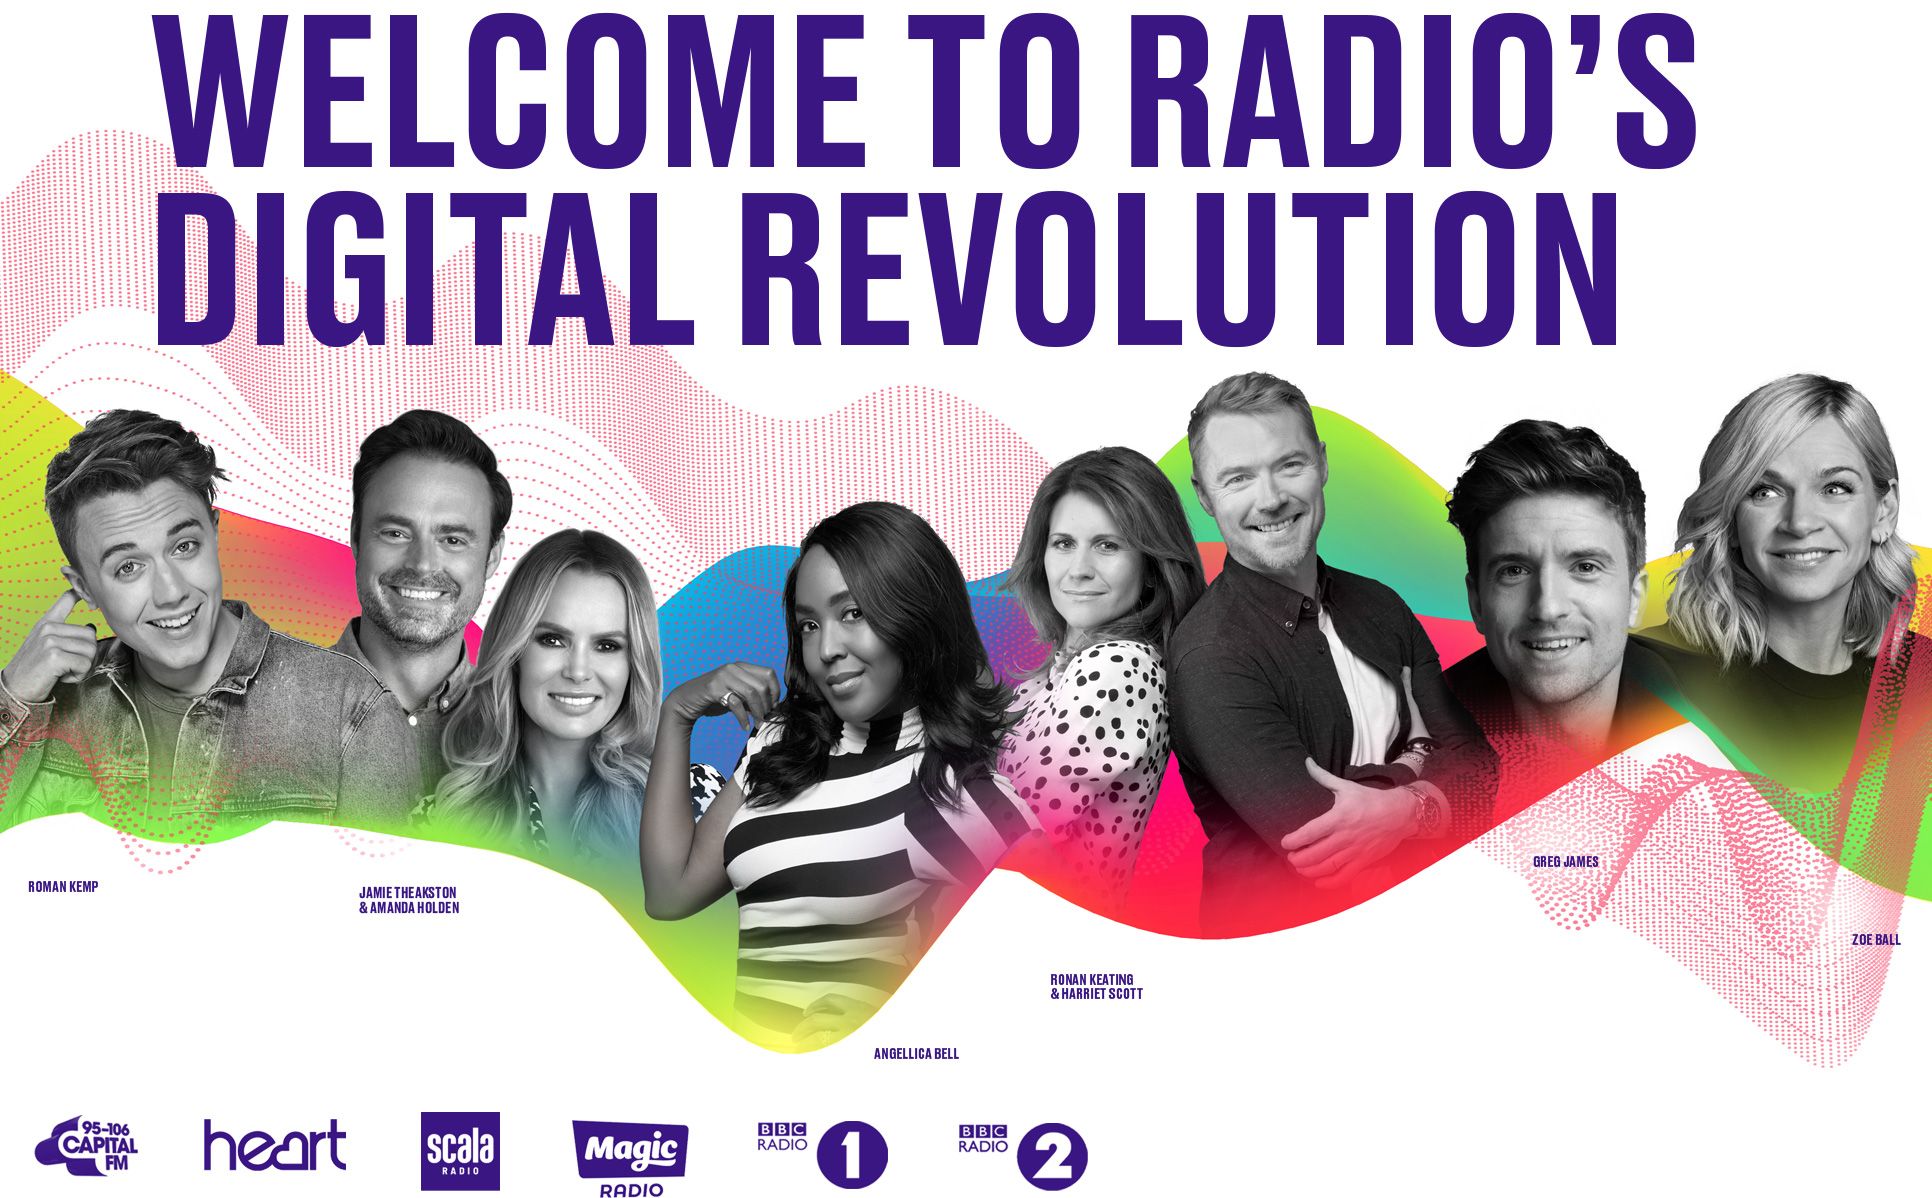 Welcome to radios digital revolution